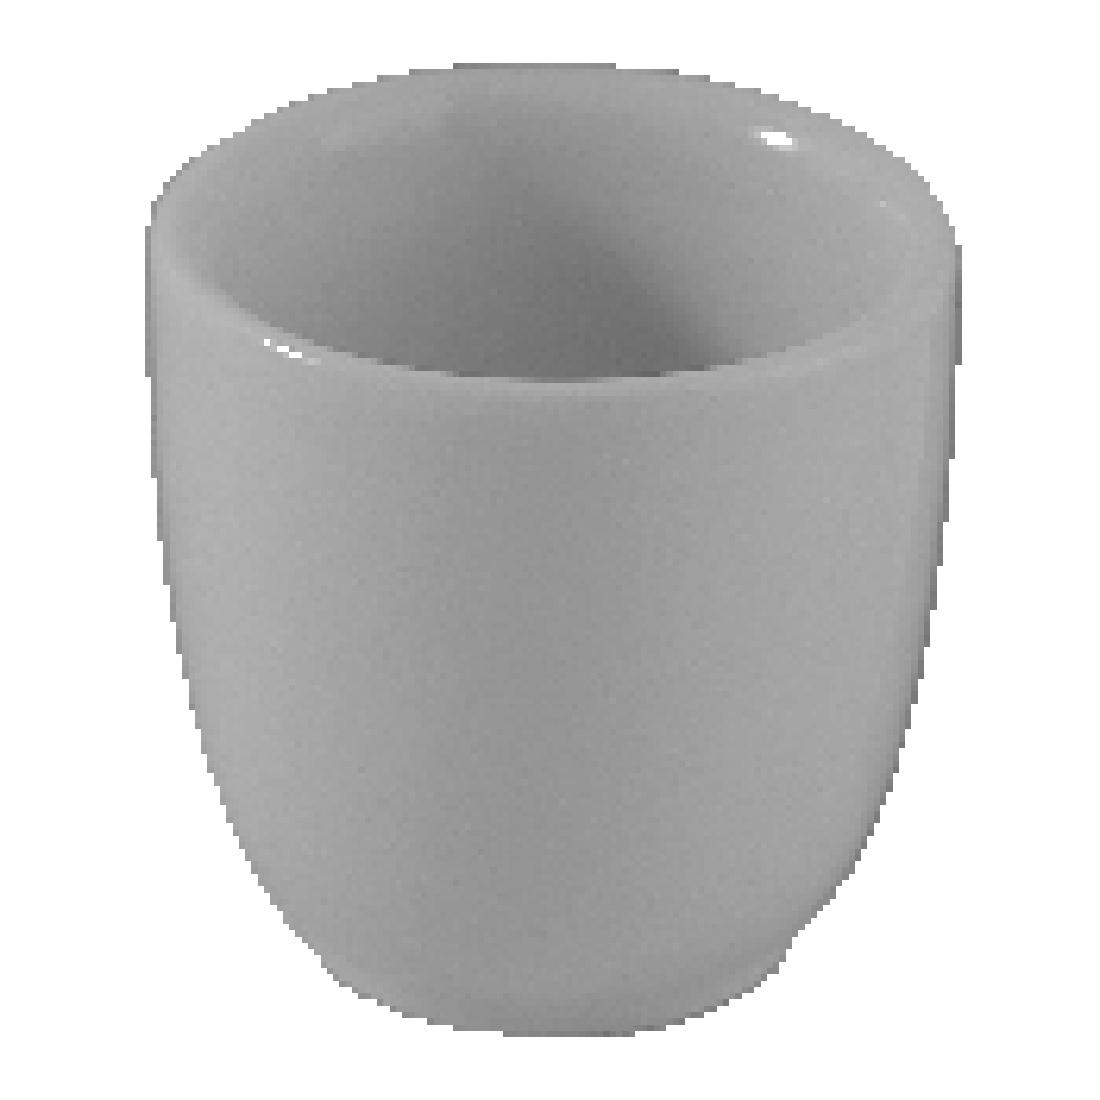 Churchill Plain Whiteware Egg Cups